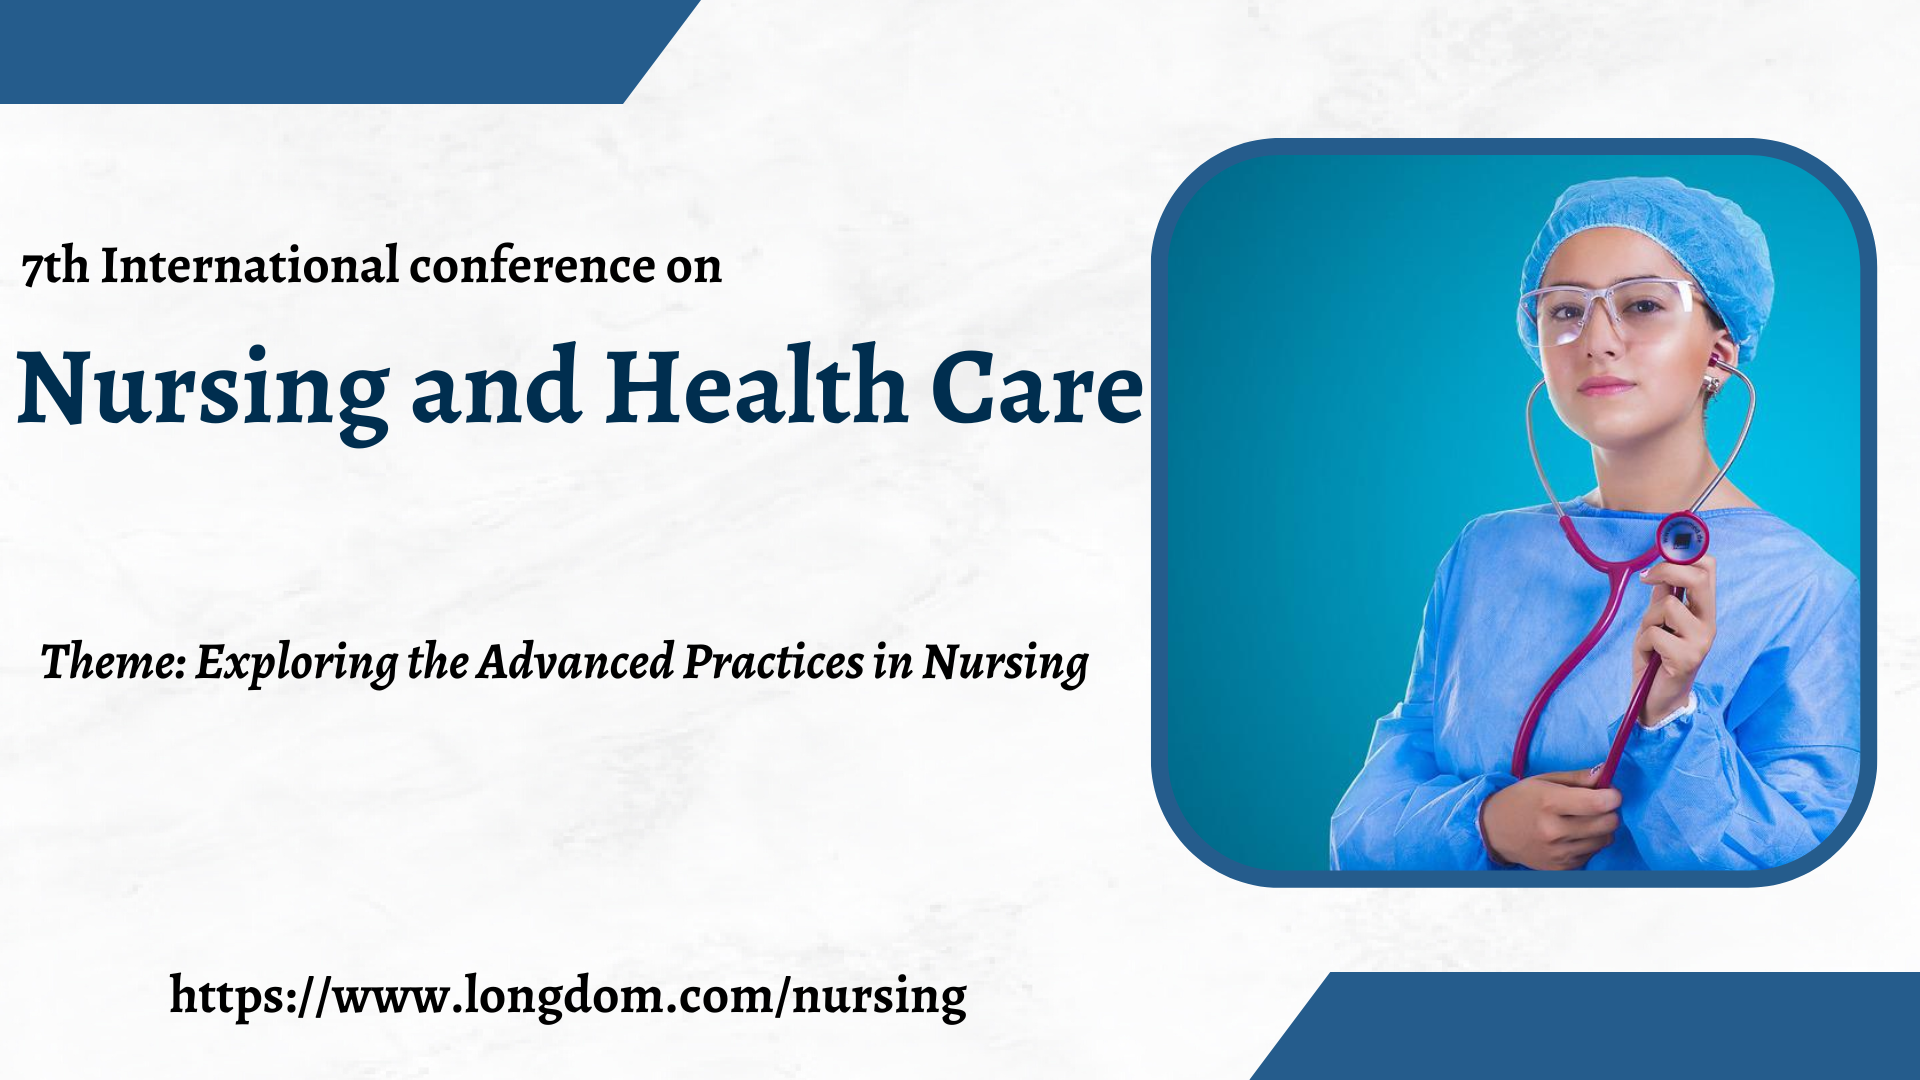 7th International Conference on Nursing and Health Care, London, England, United Kingdom